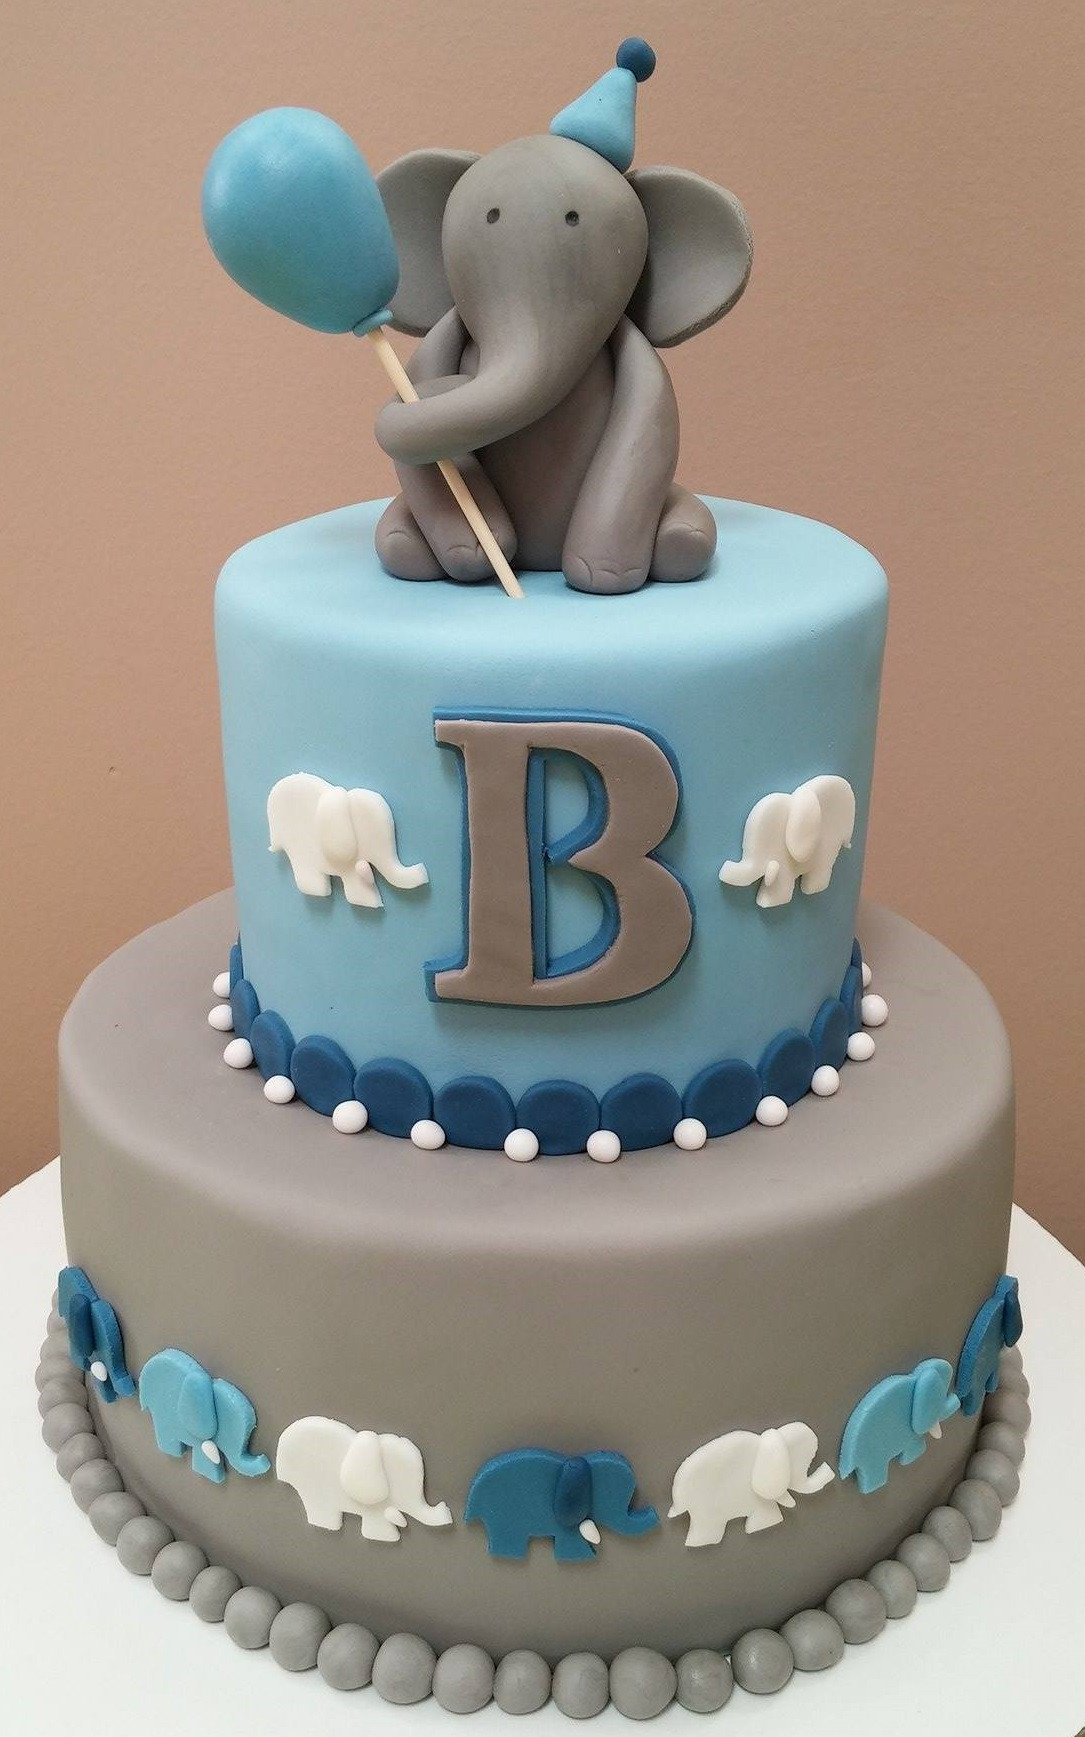 Baby Boy 1st Birthday Cake
 Elephant cake for a 1st birthday – The Lovely Baker